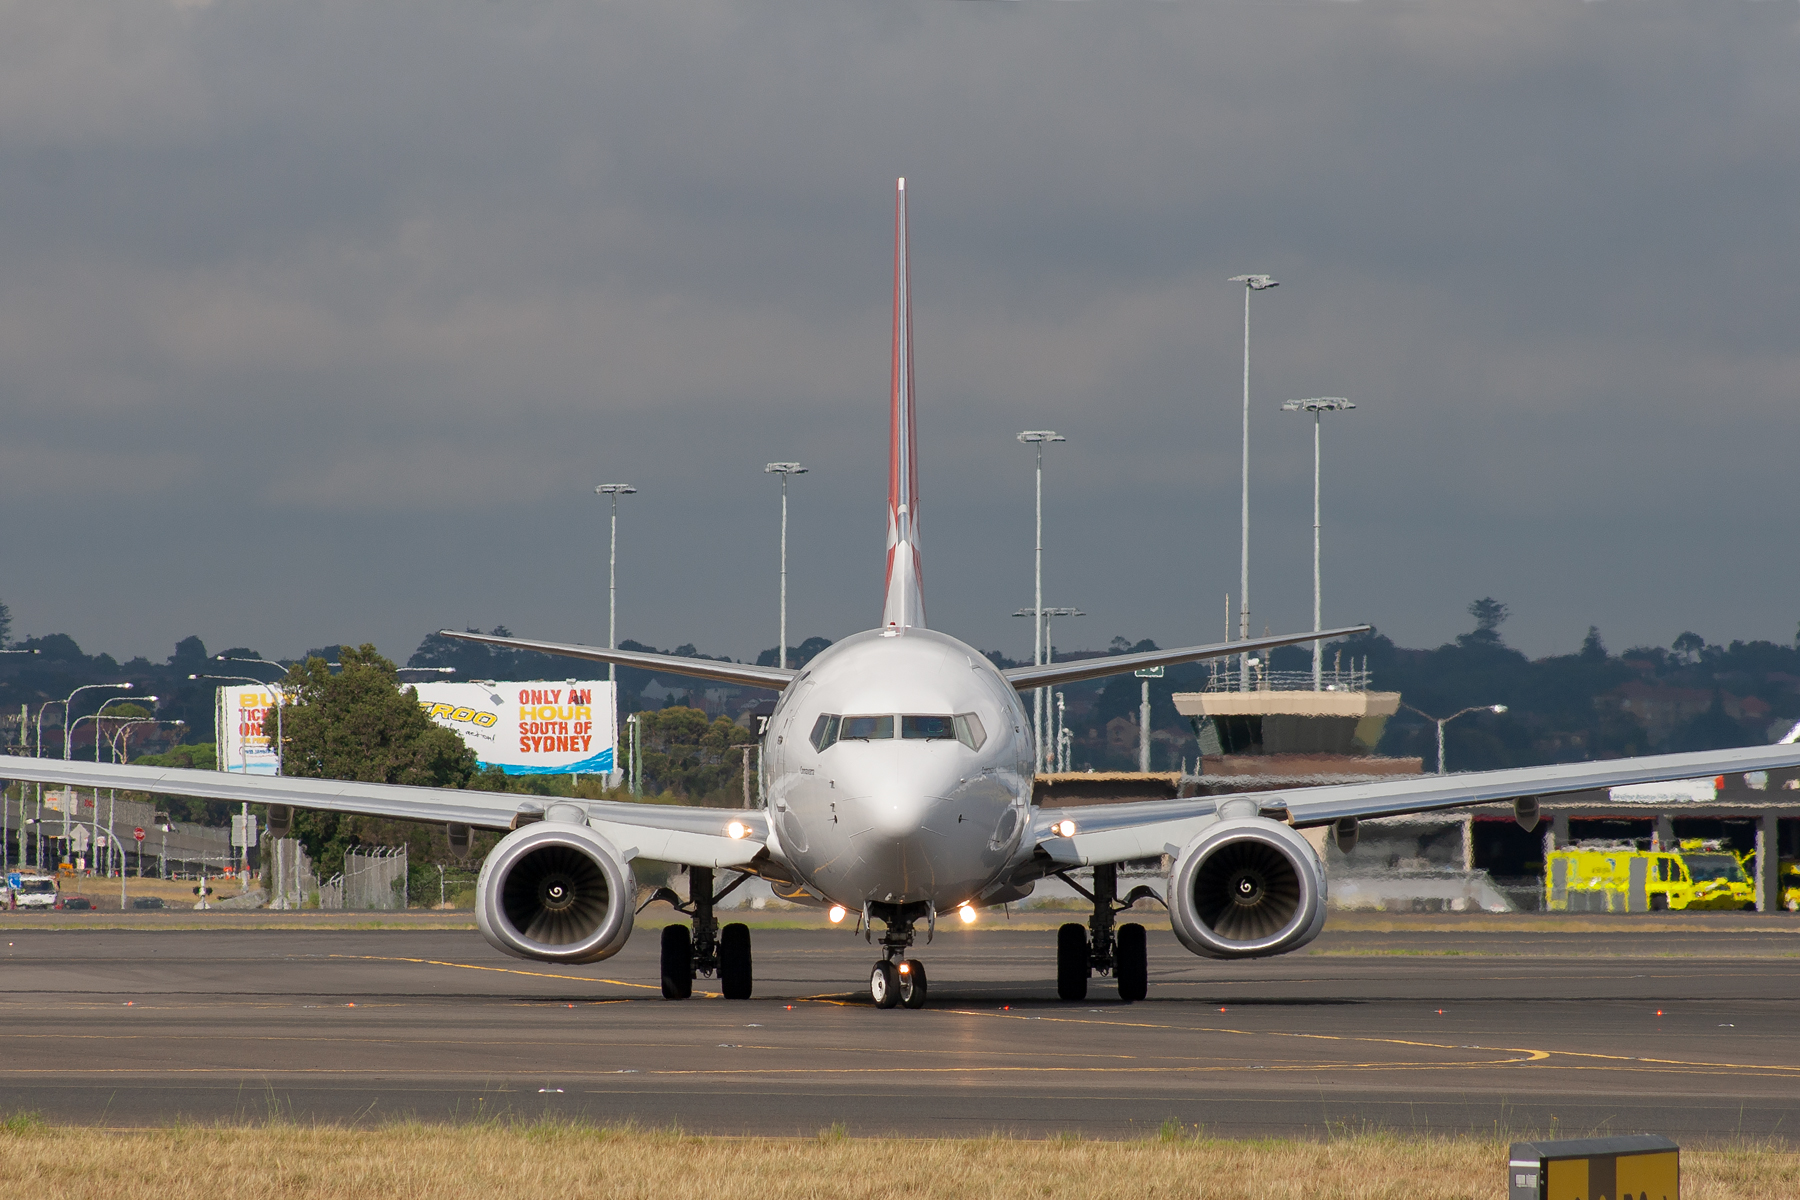 Qantas Boeing 737-800 VH-VXO at Kingsford Smith